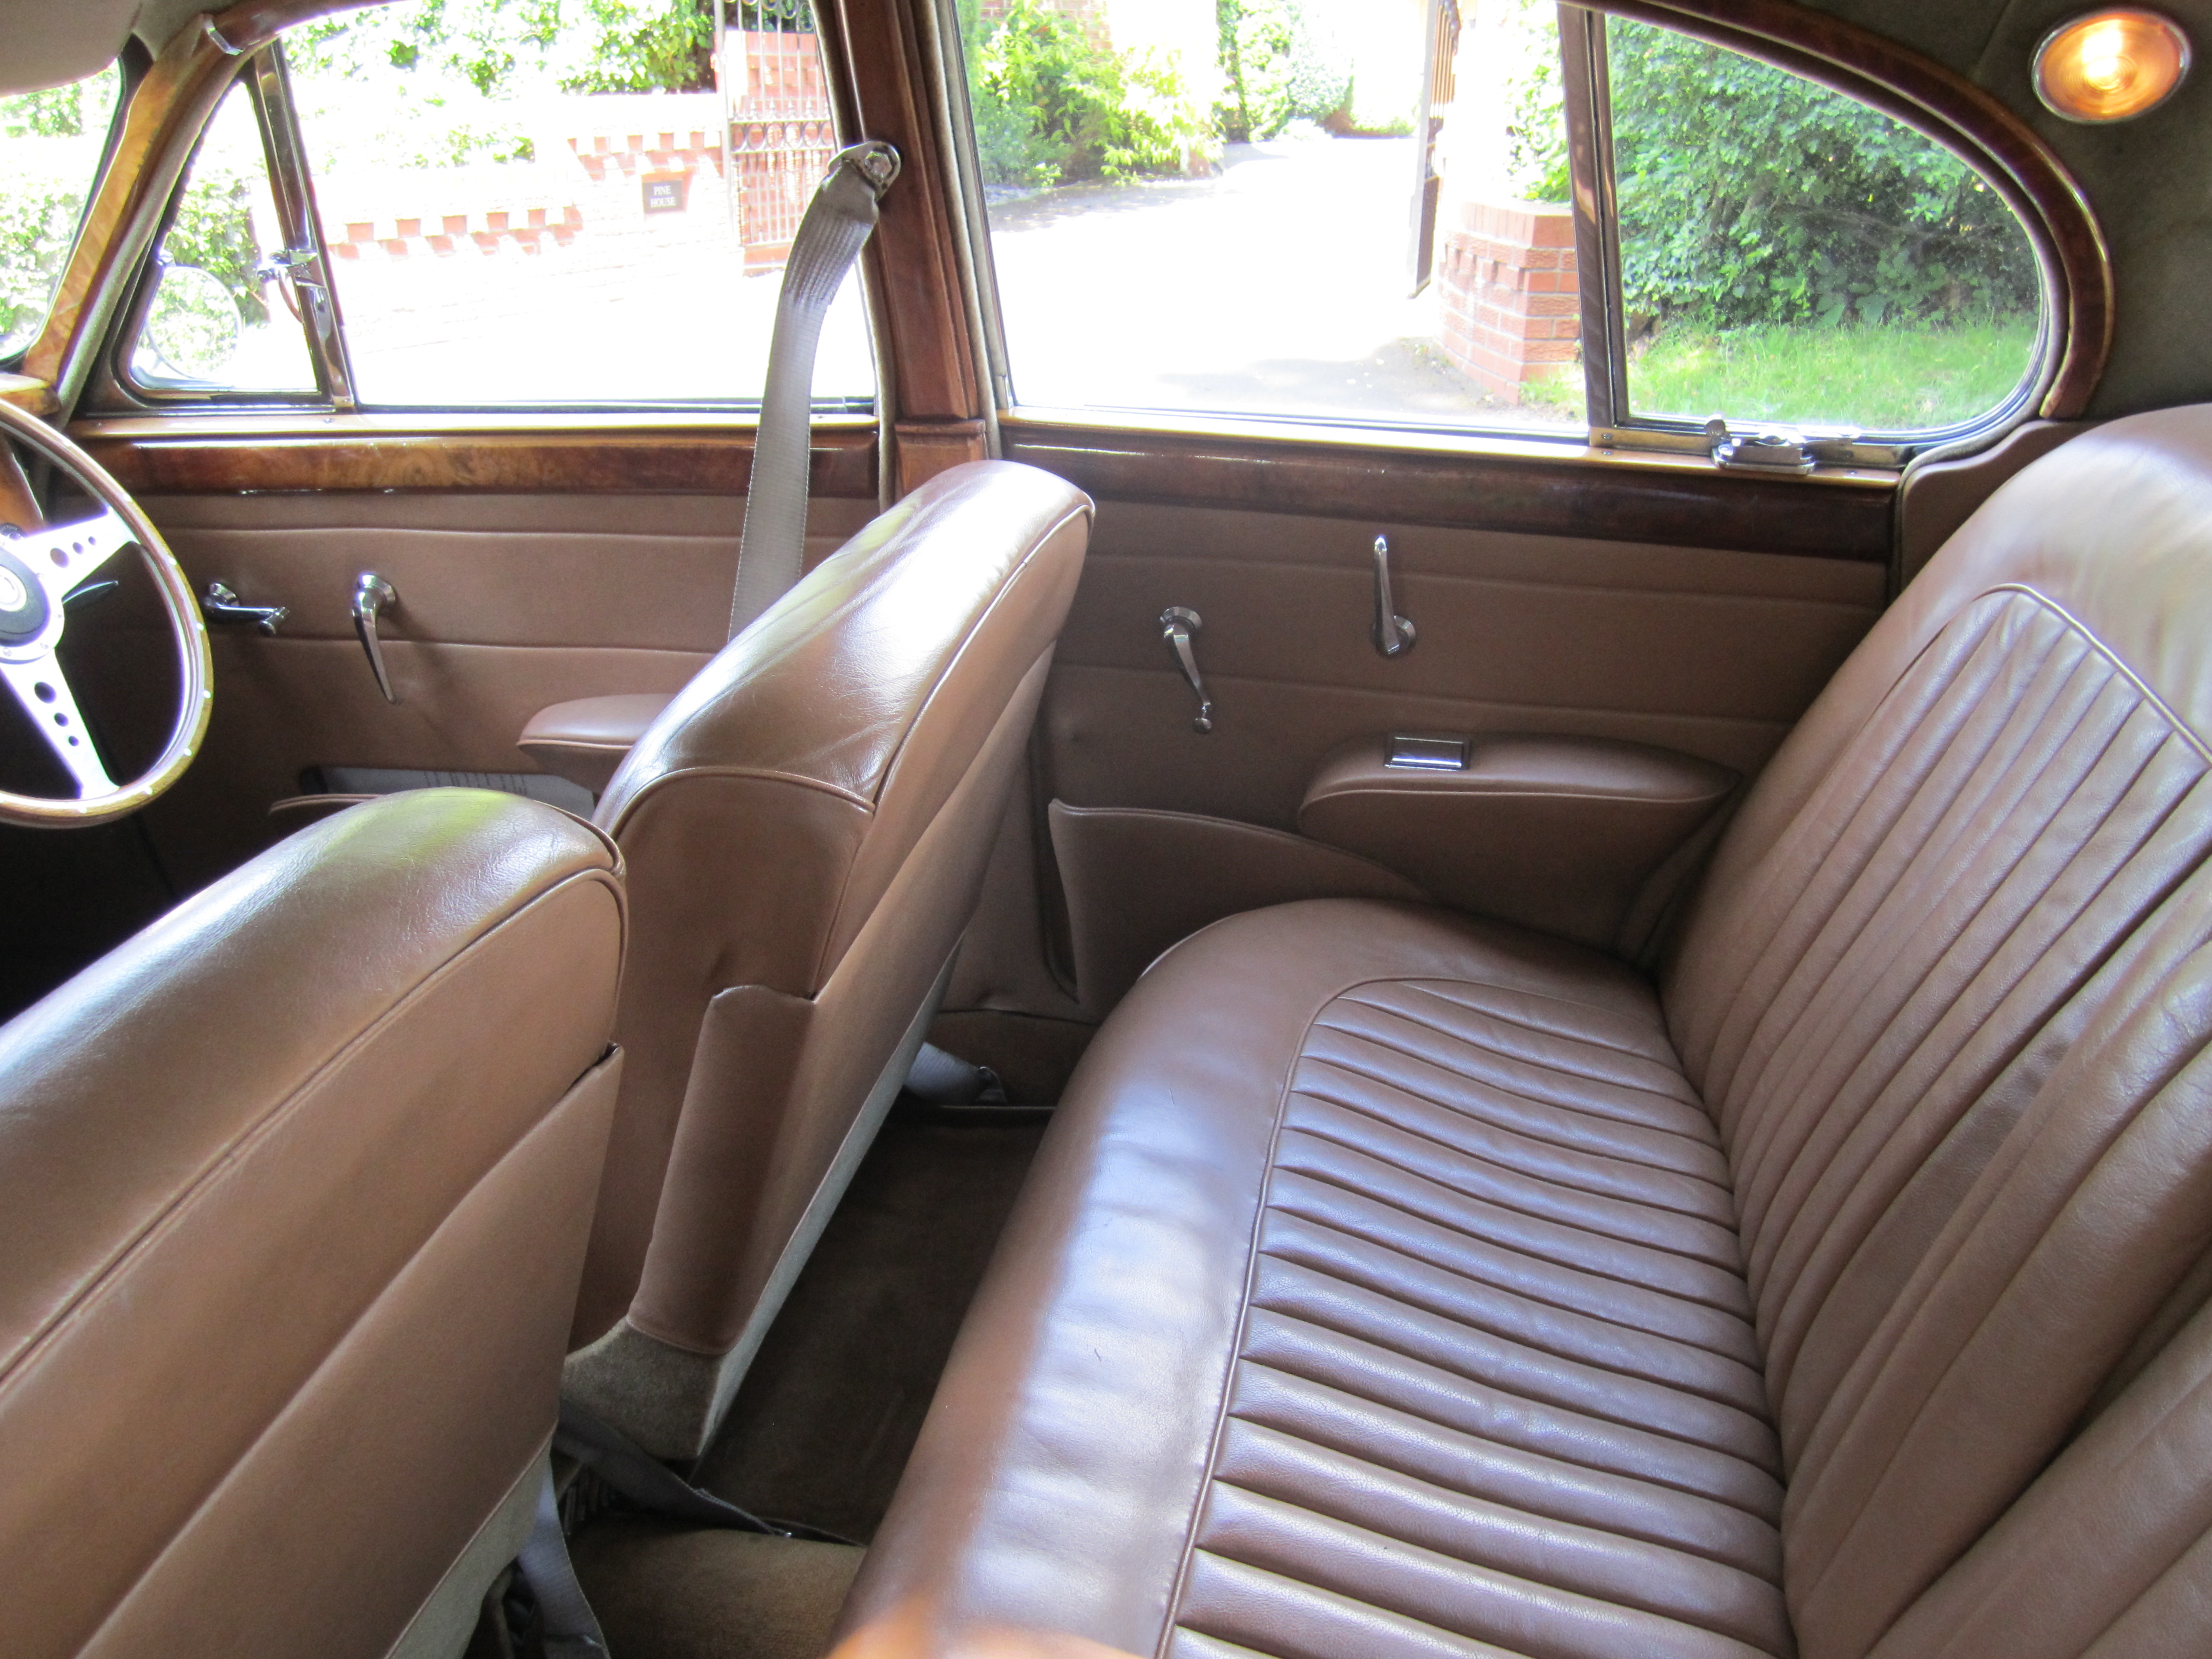 Inside the Jaguar MK2